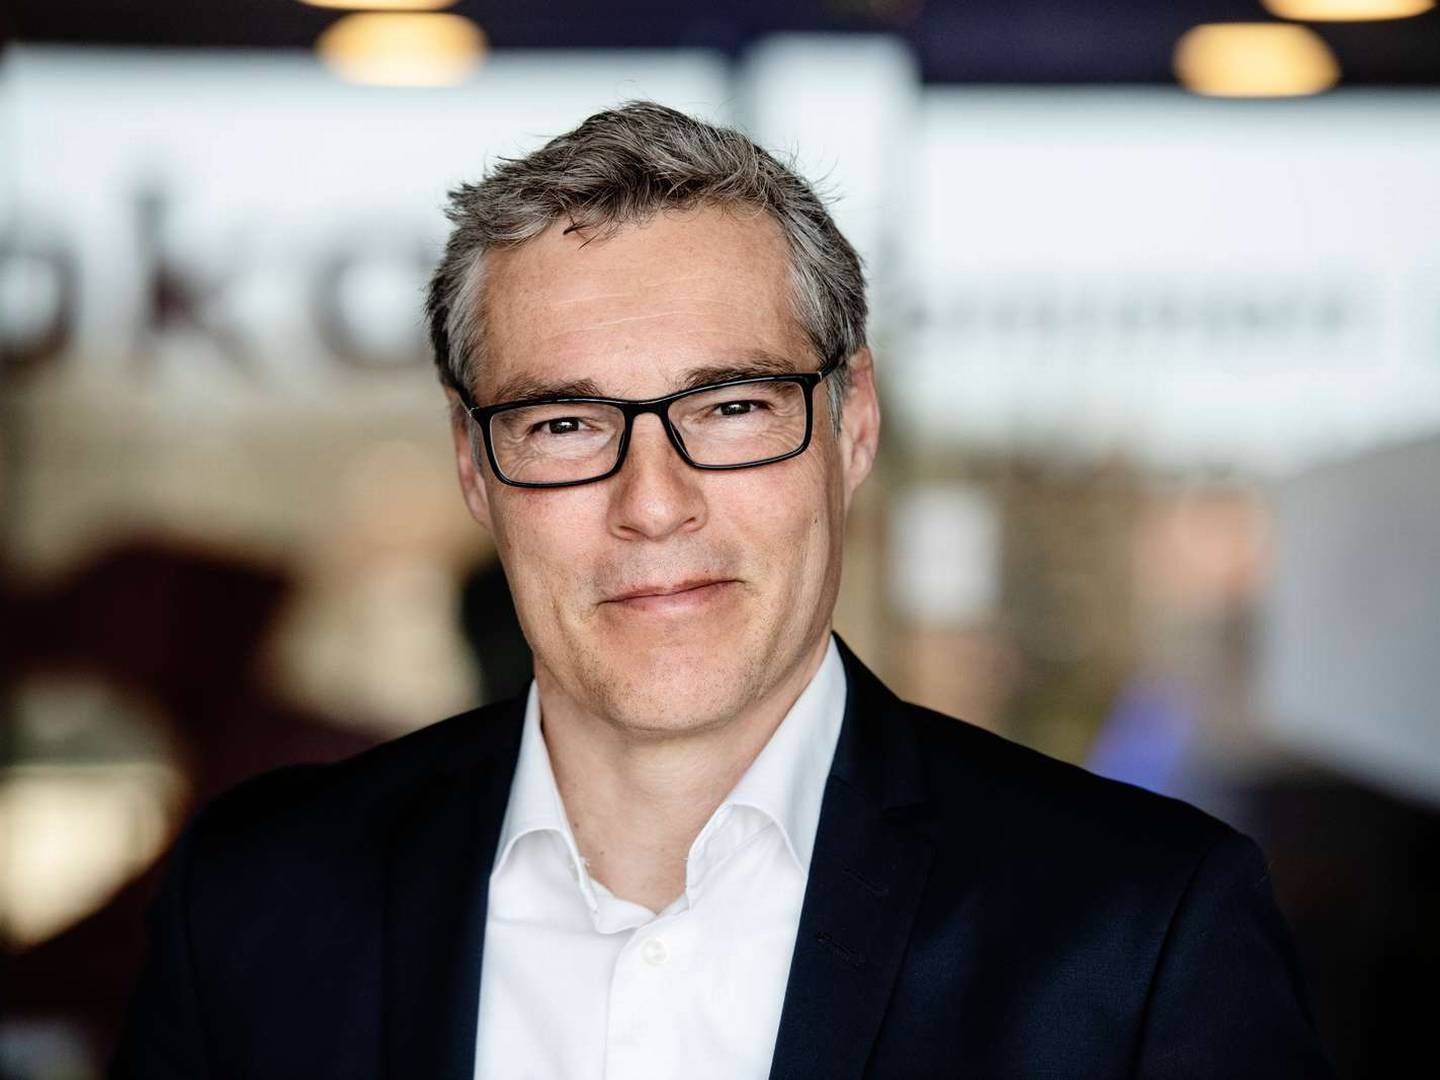 Jon Johnsen is CEO of Danish pension company PKA. | Photo: Pr/pka